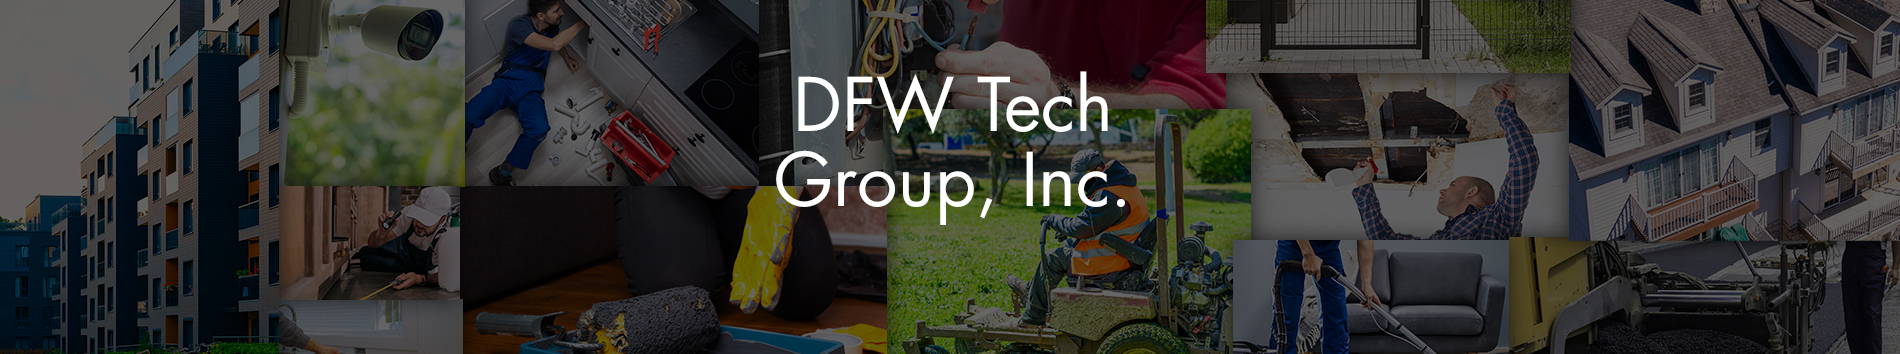 DFW Tech Group, Inc.